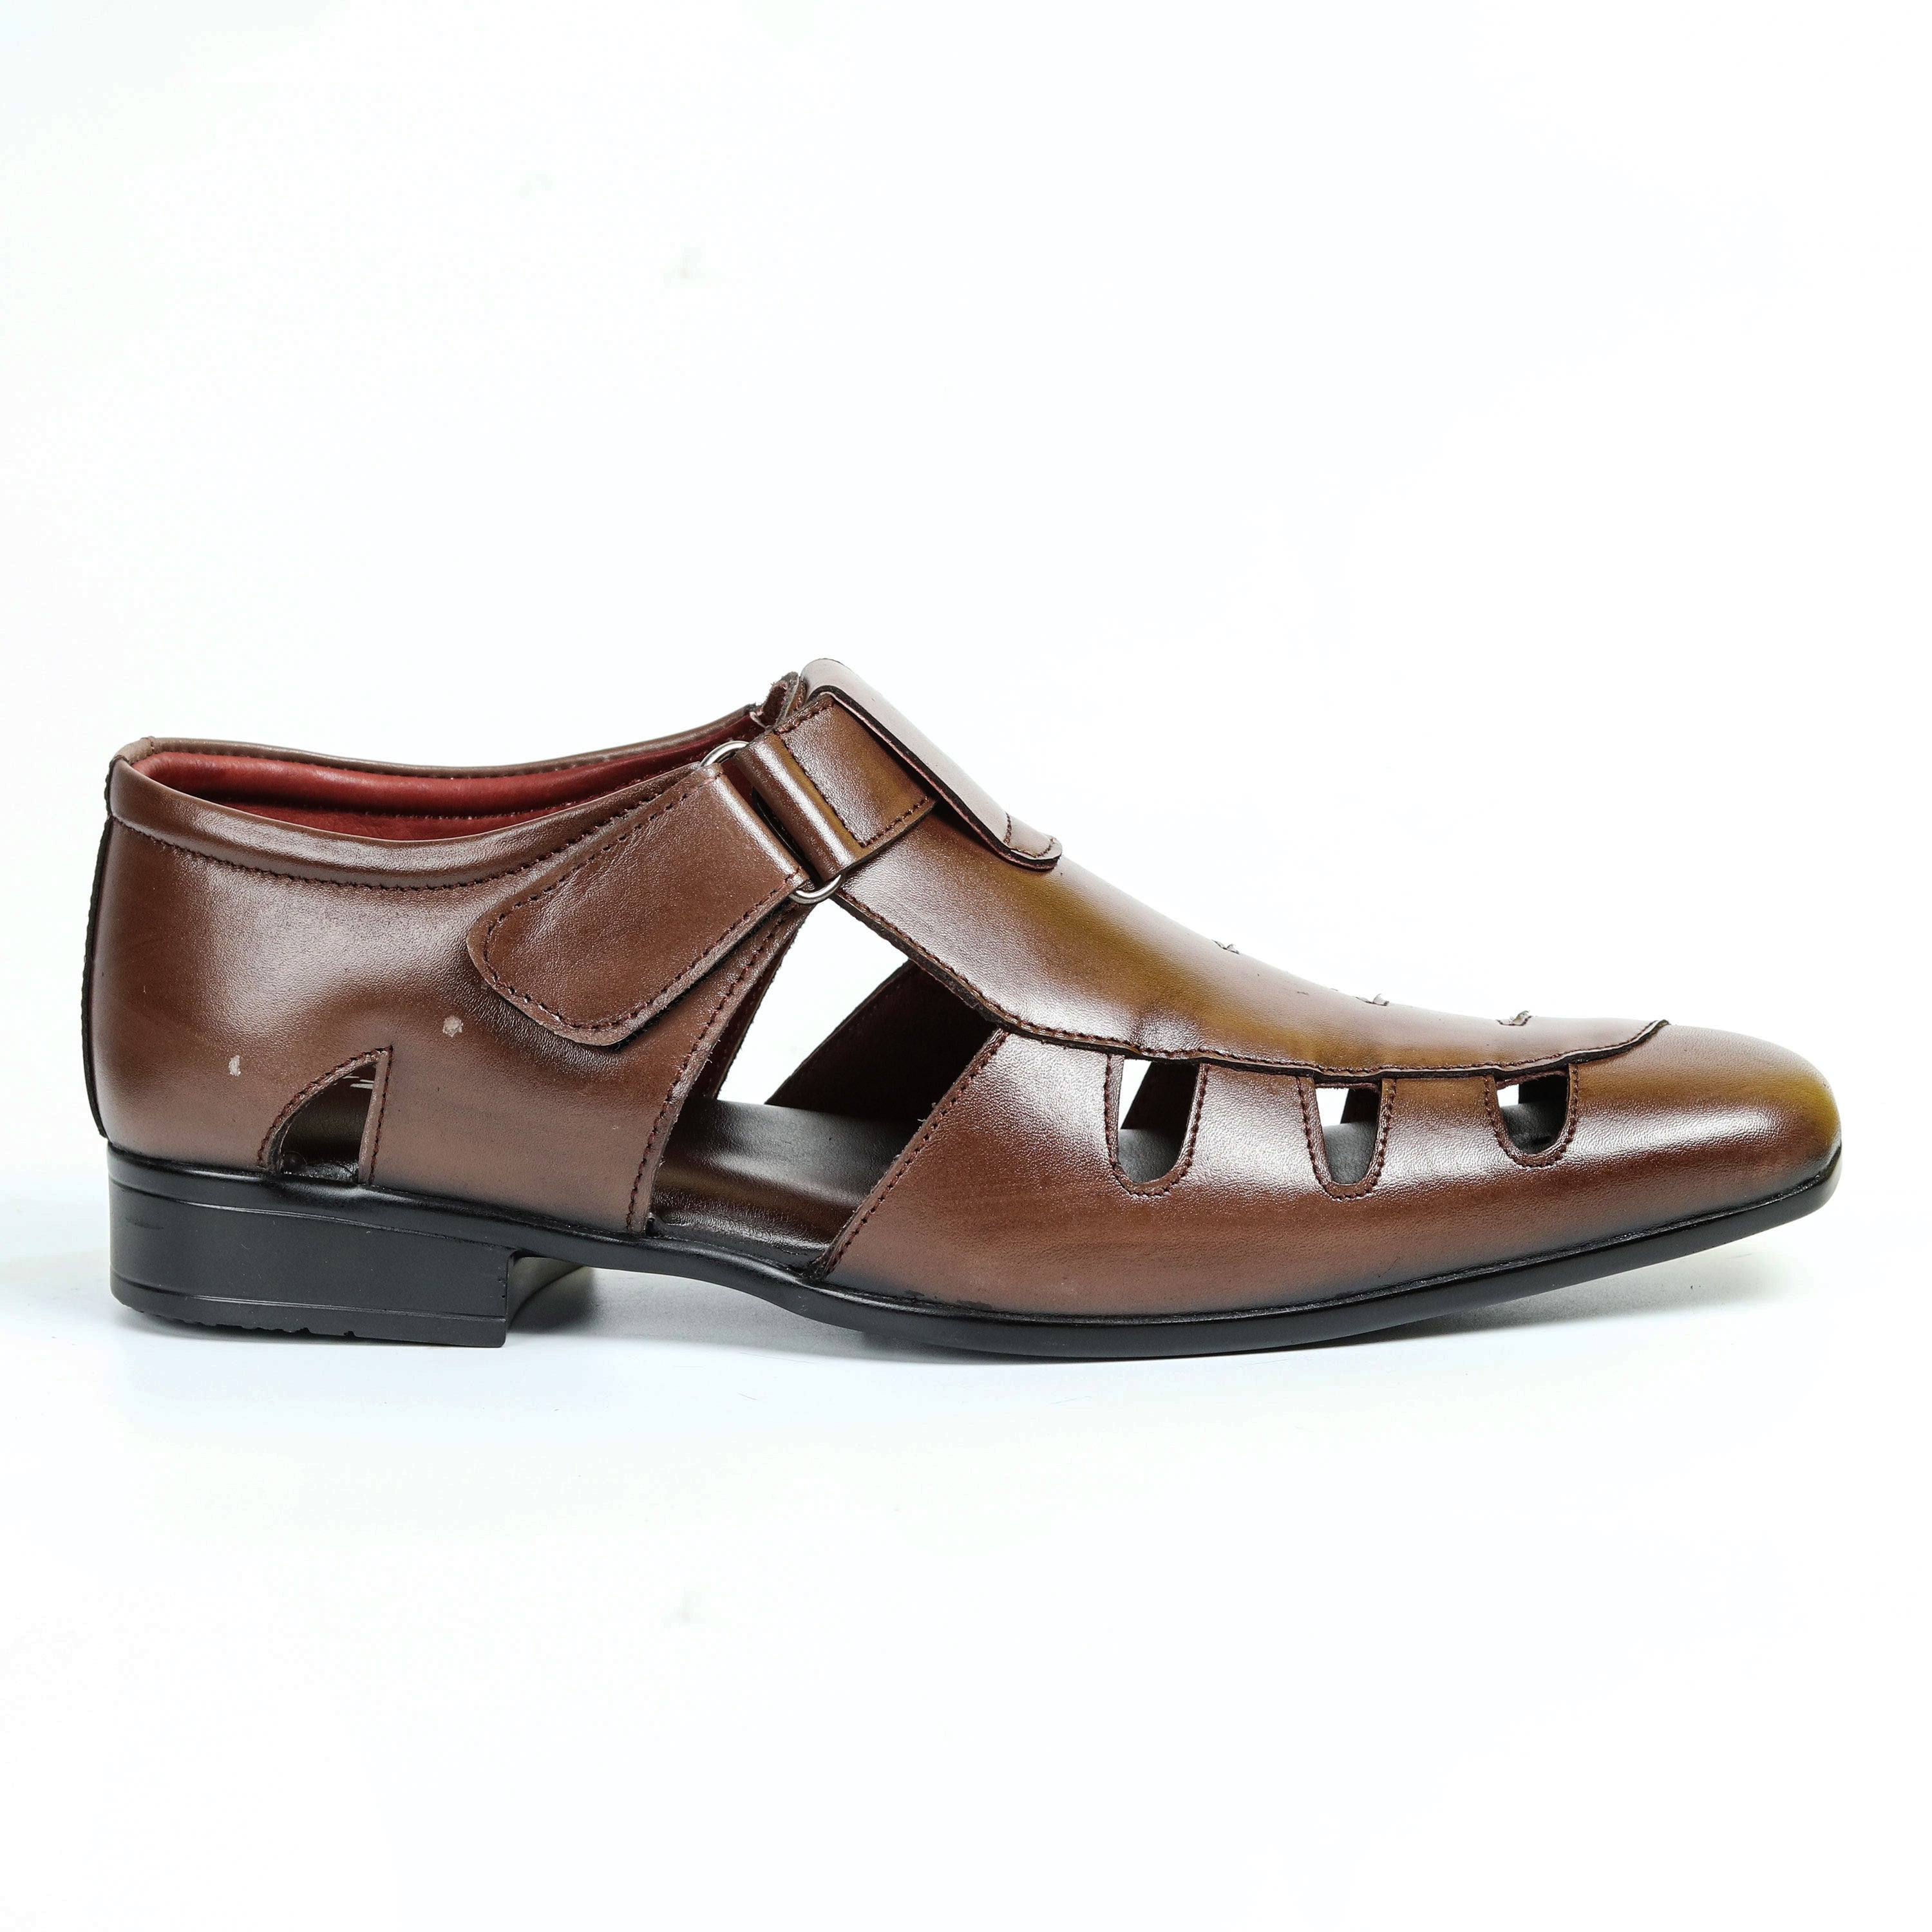 Zays Leather Premium Close Sandal For Men (Brown) - ZAYSSF12